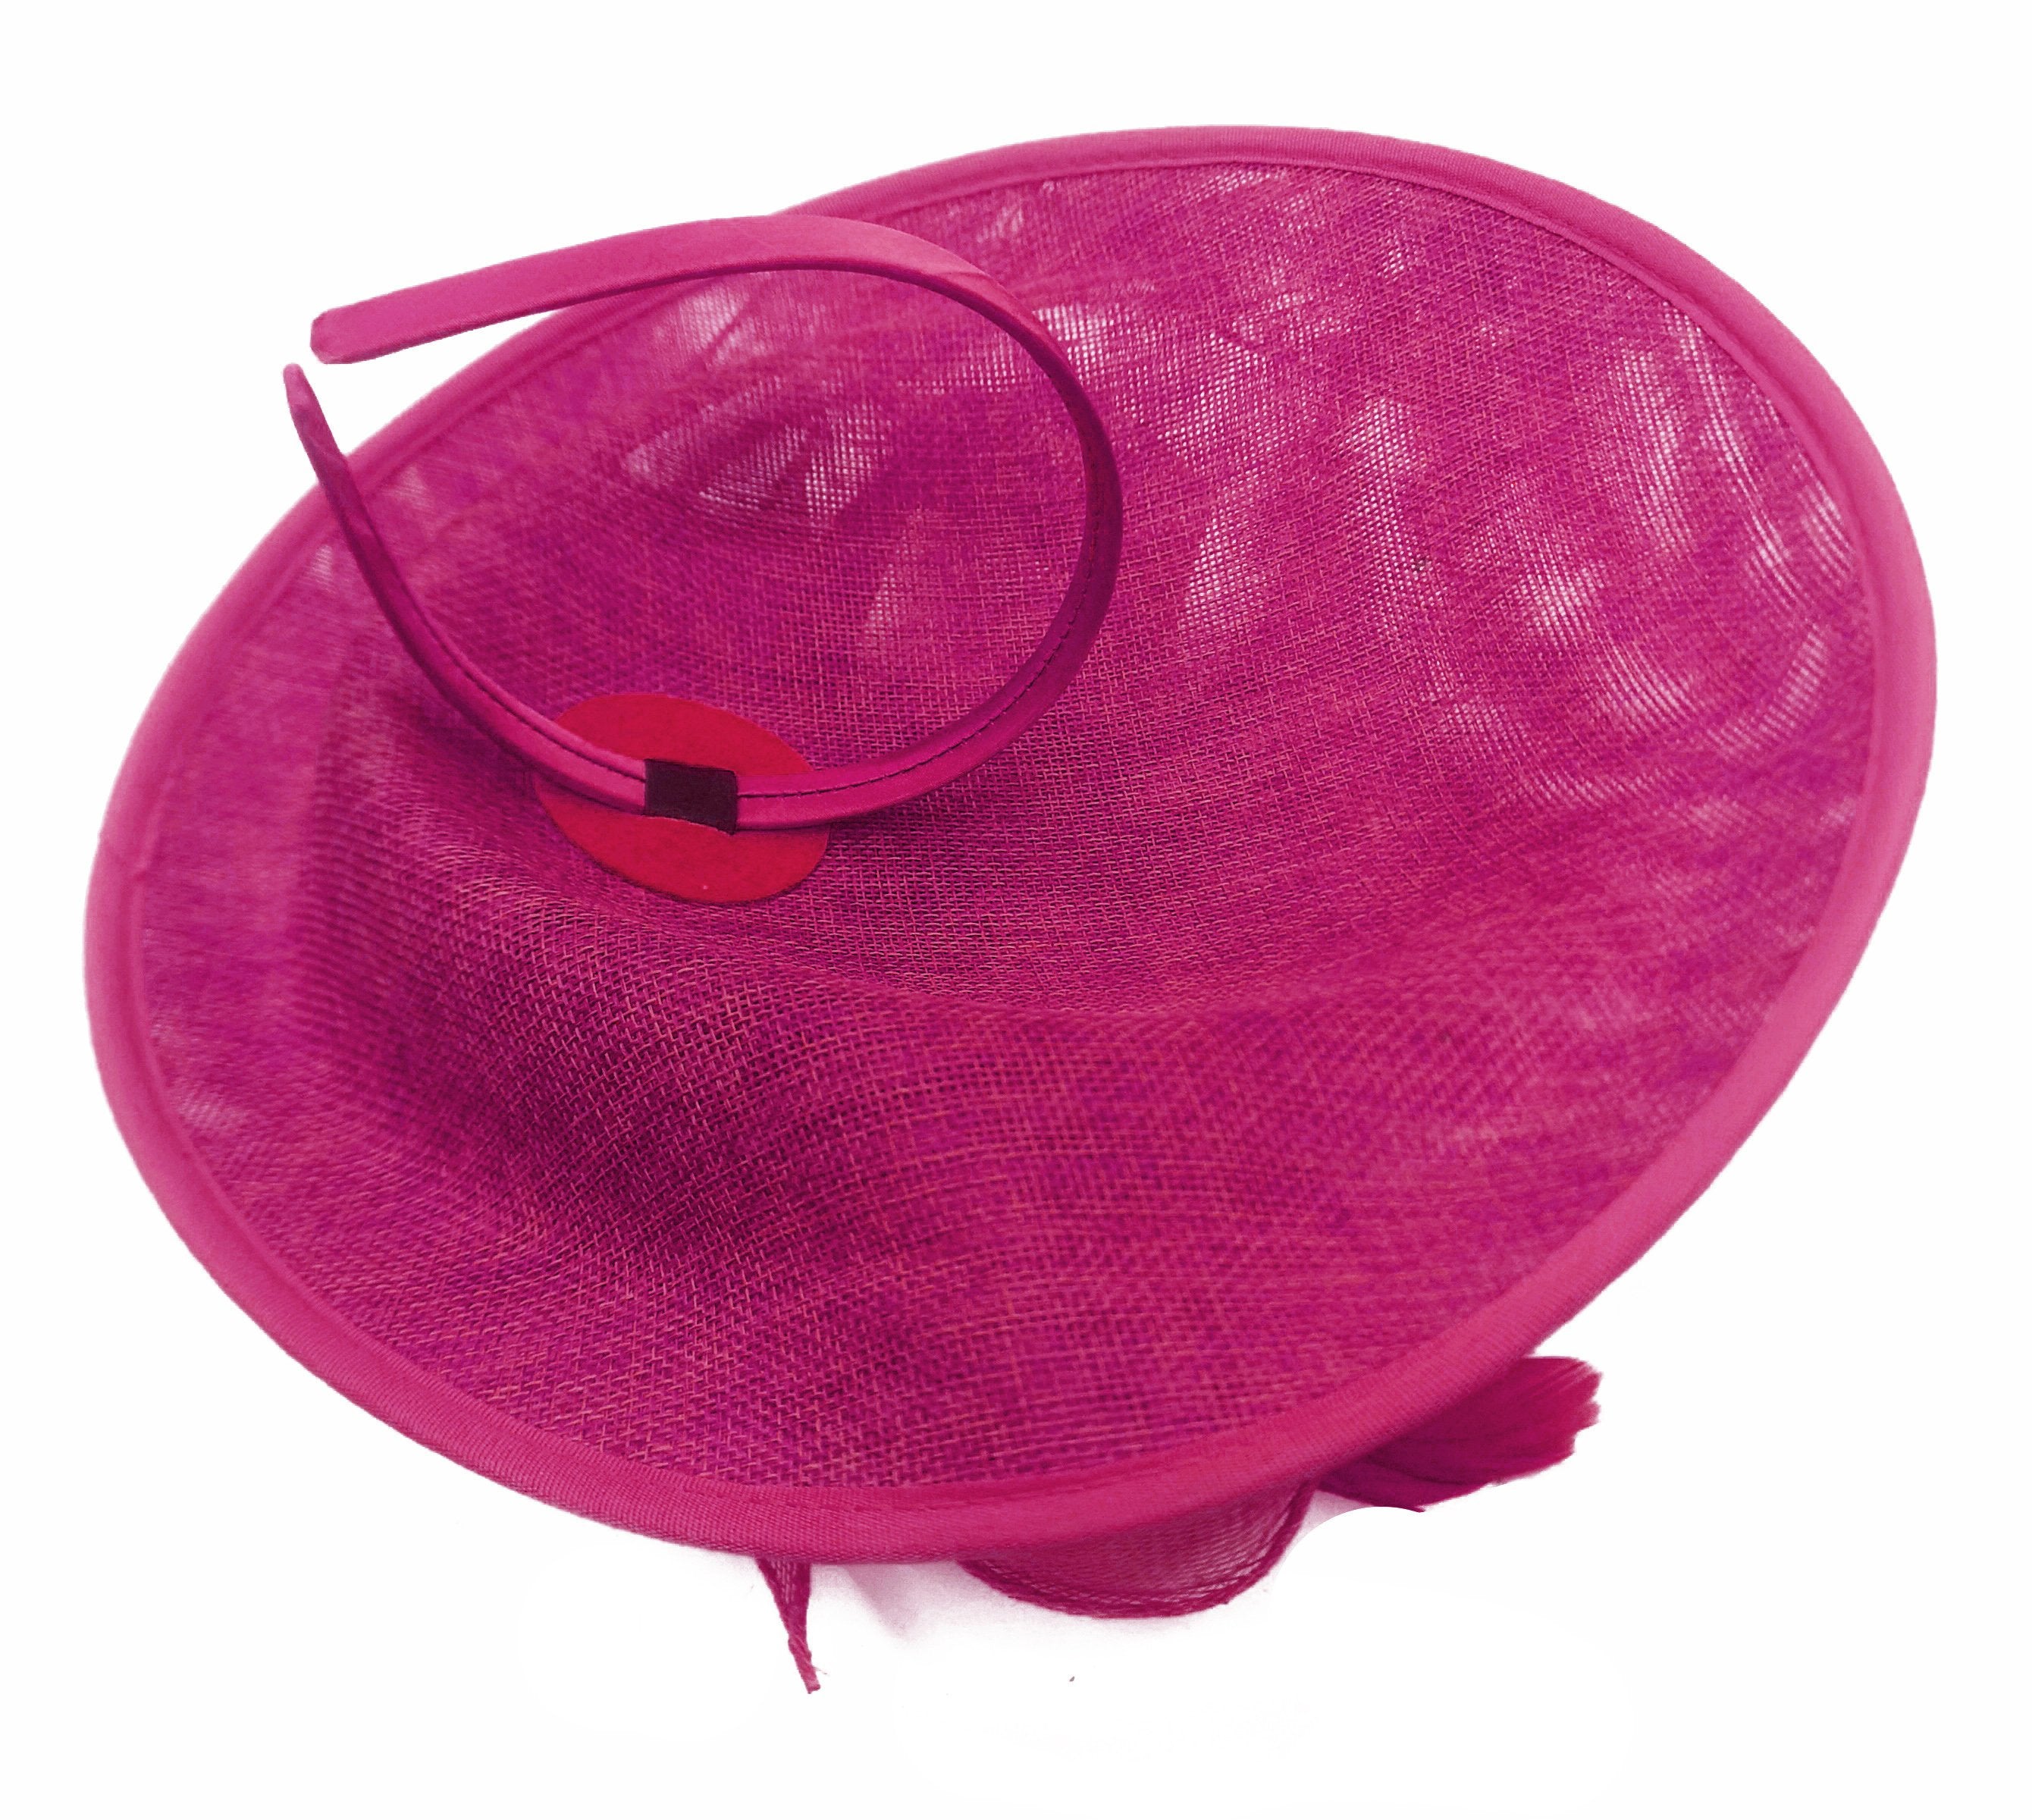 Caprilite Big Saucer Sinamay Fuchsia Hot Pink & Dusty Pink Mixed Colour Fascinator On Headband